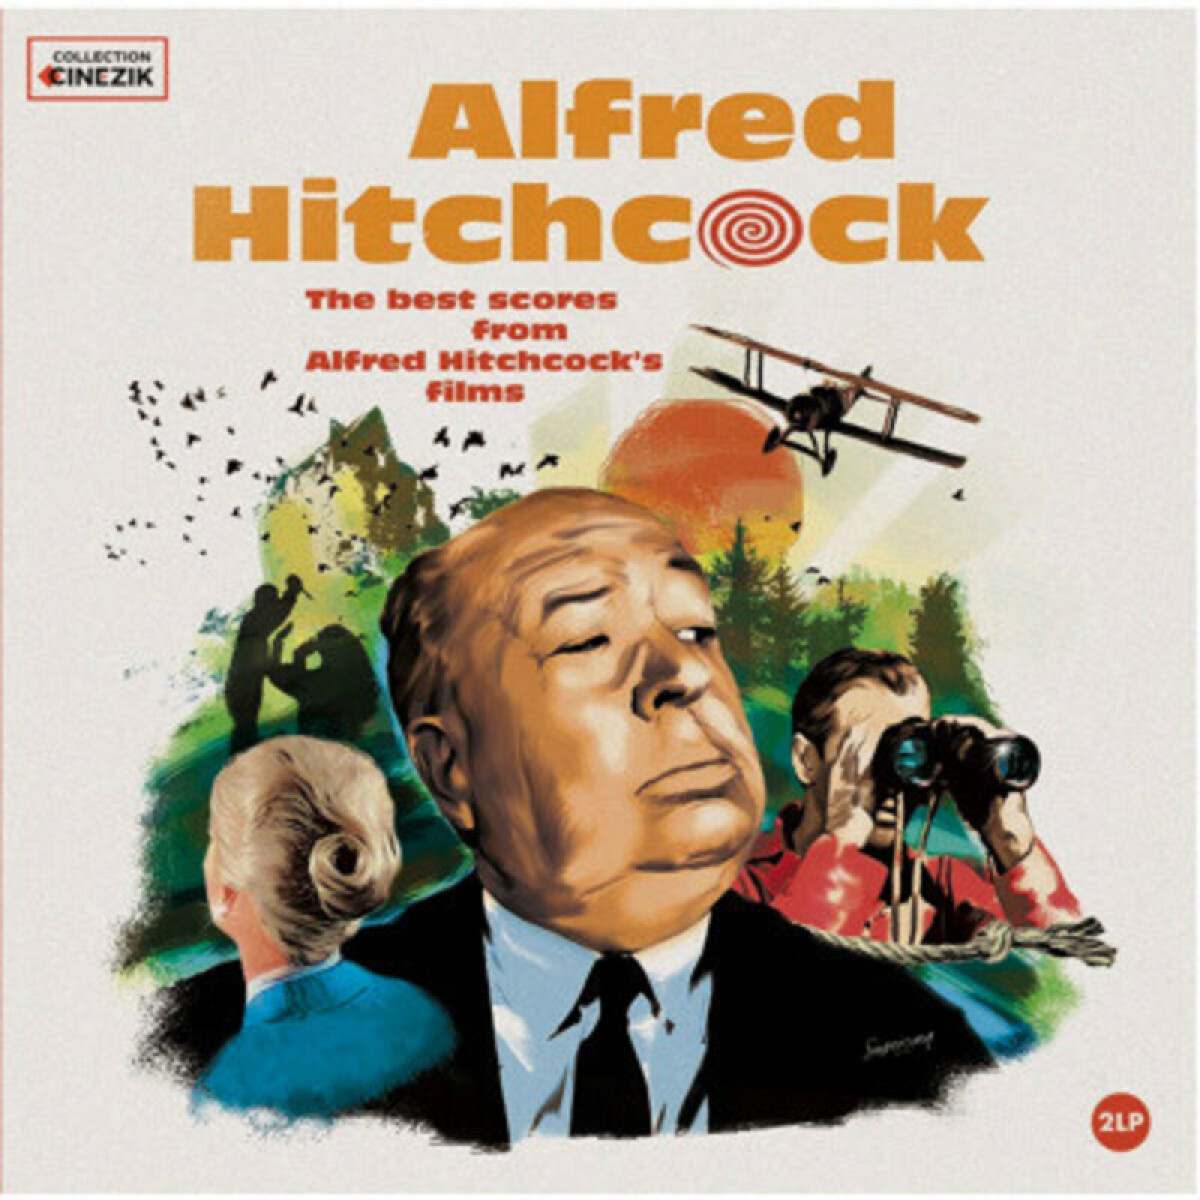 (l) Varios - Collection Cinezik - Alfred Hitchcock - Vinilo 